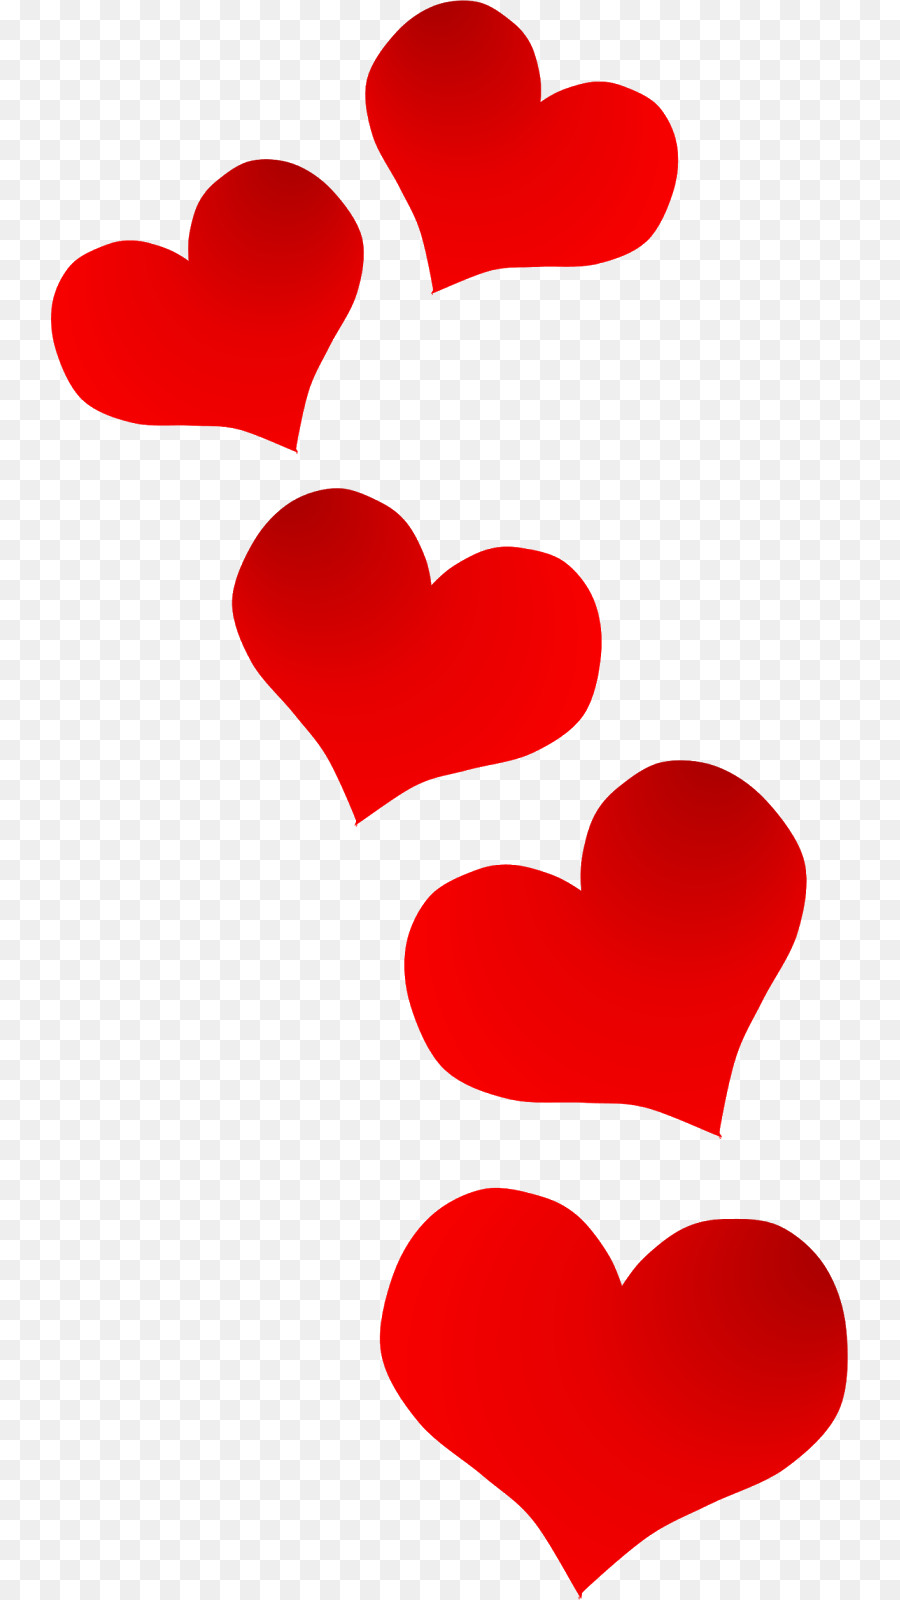 Heart Clip art - hearts png download - 797*1600 - Free Transparent  png Download.